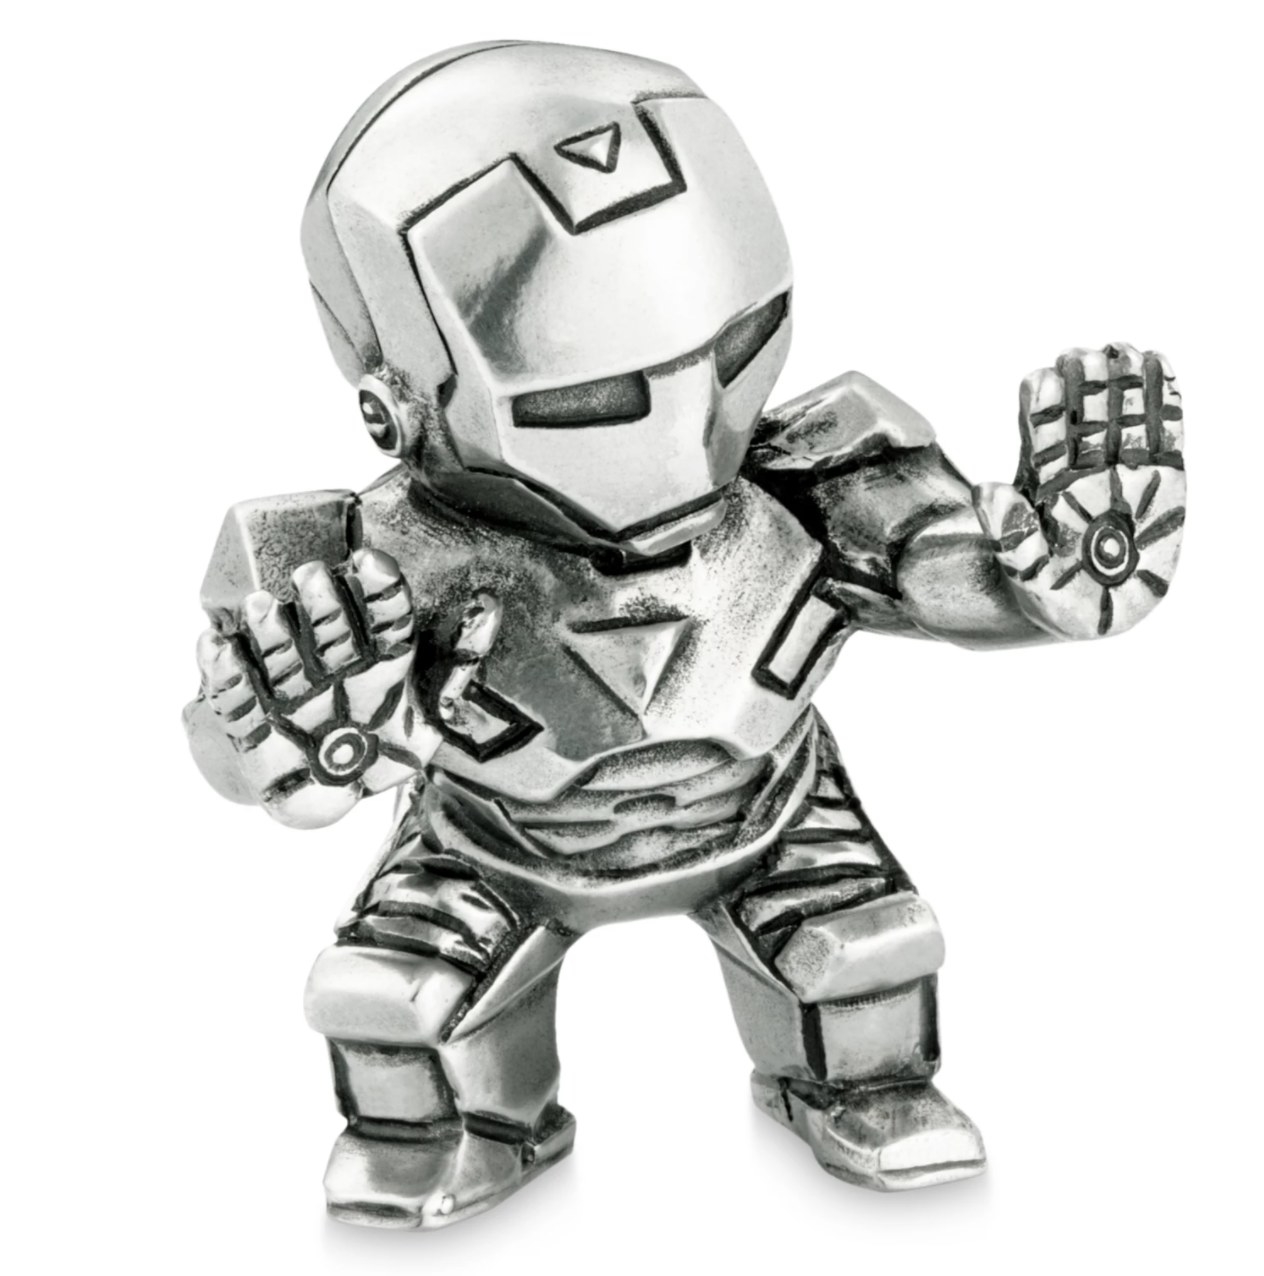 the silver iron man figurine